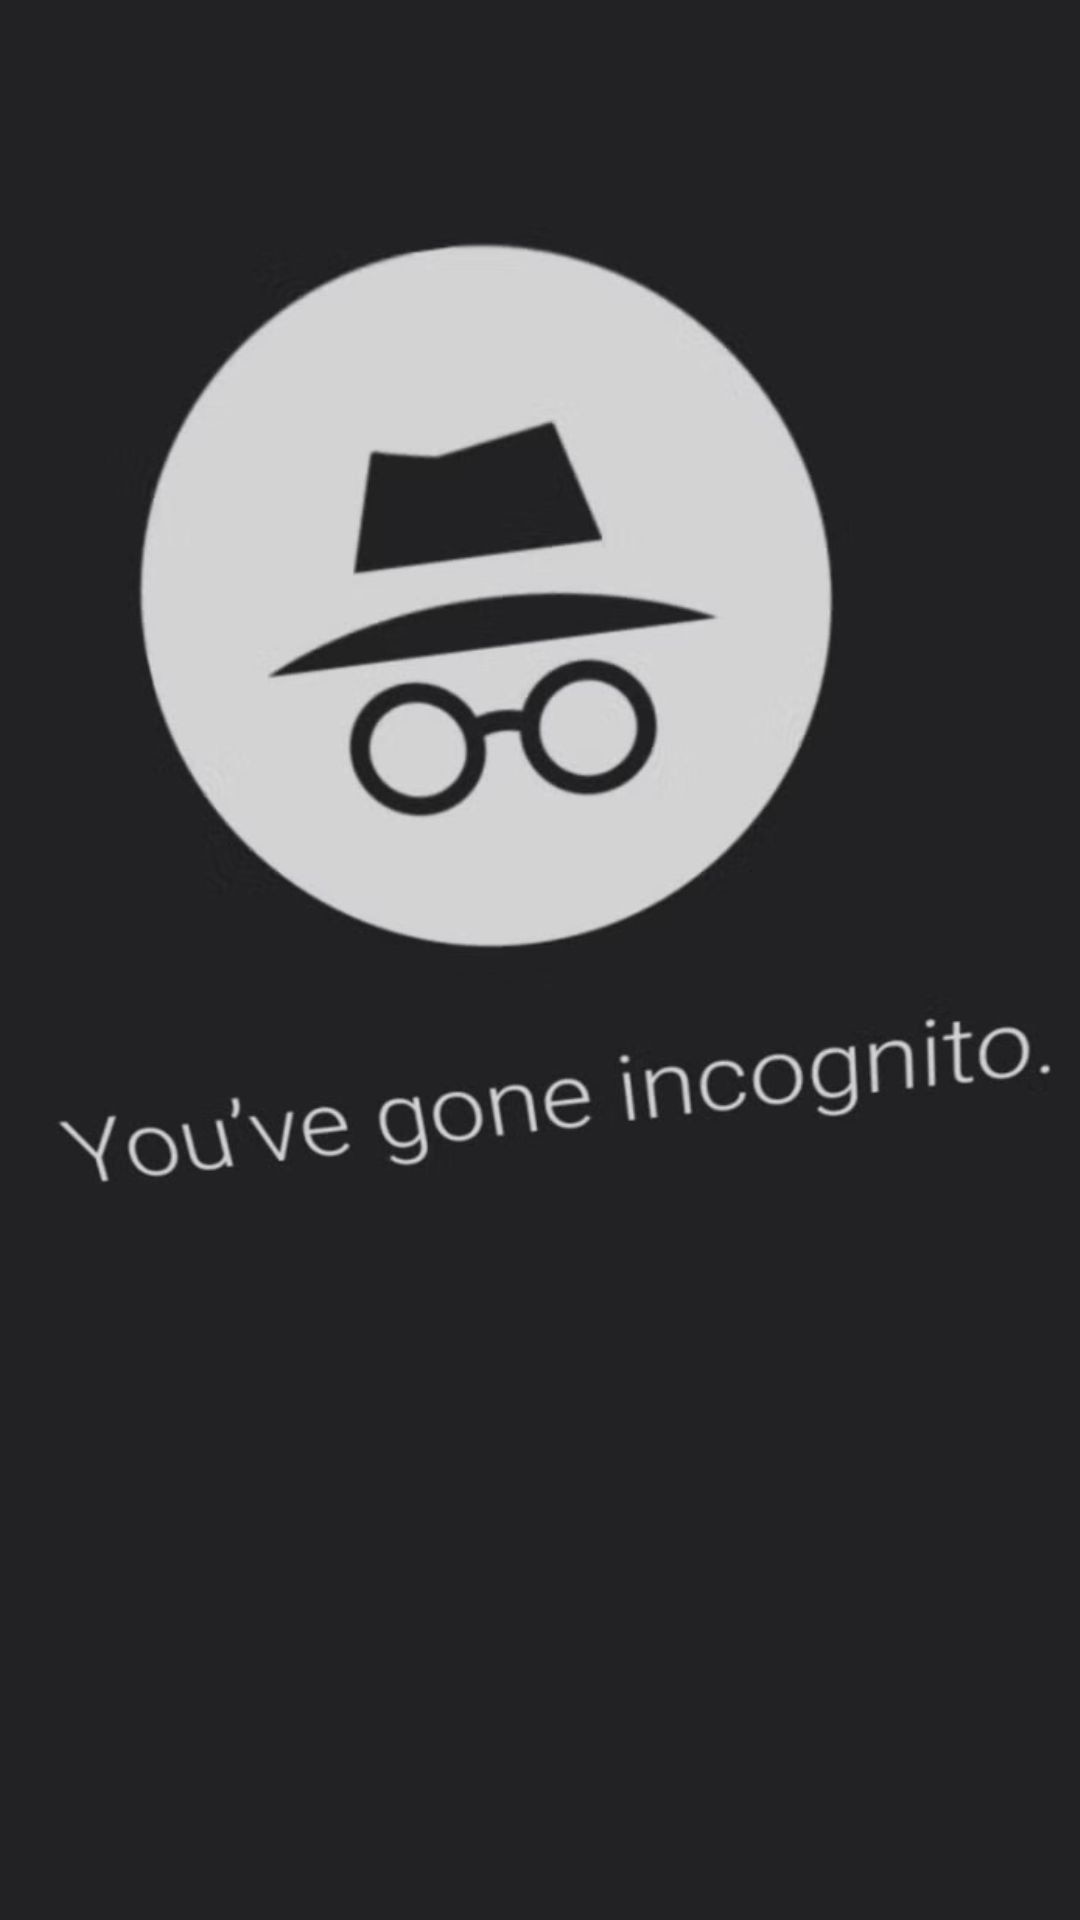 incognito | Android Police